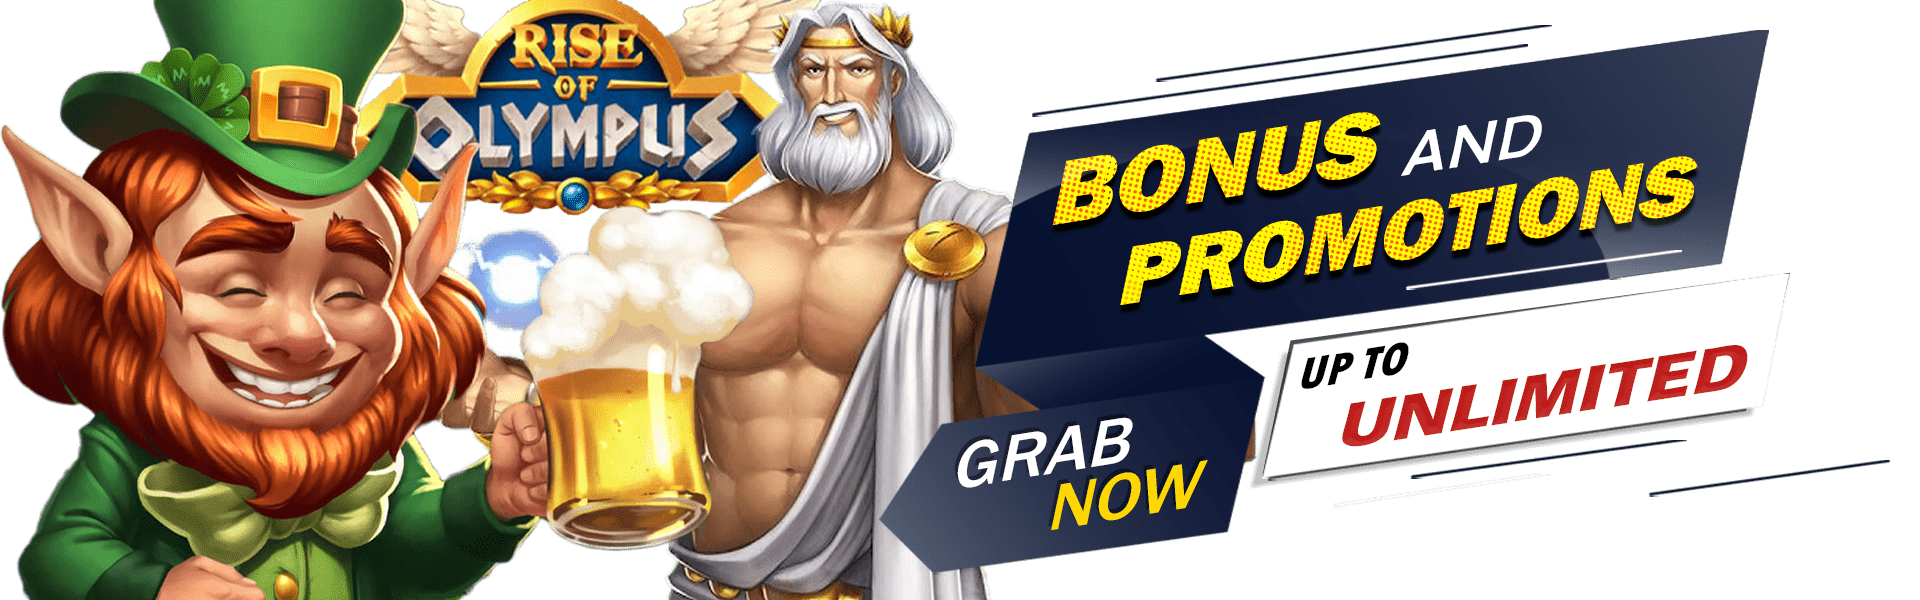 play'n go bonus and promotion banner